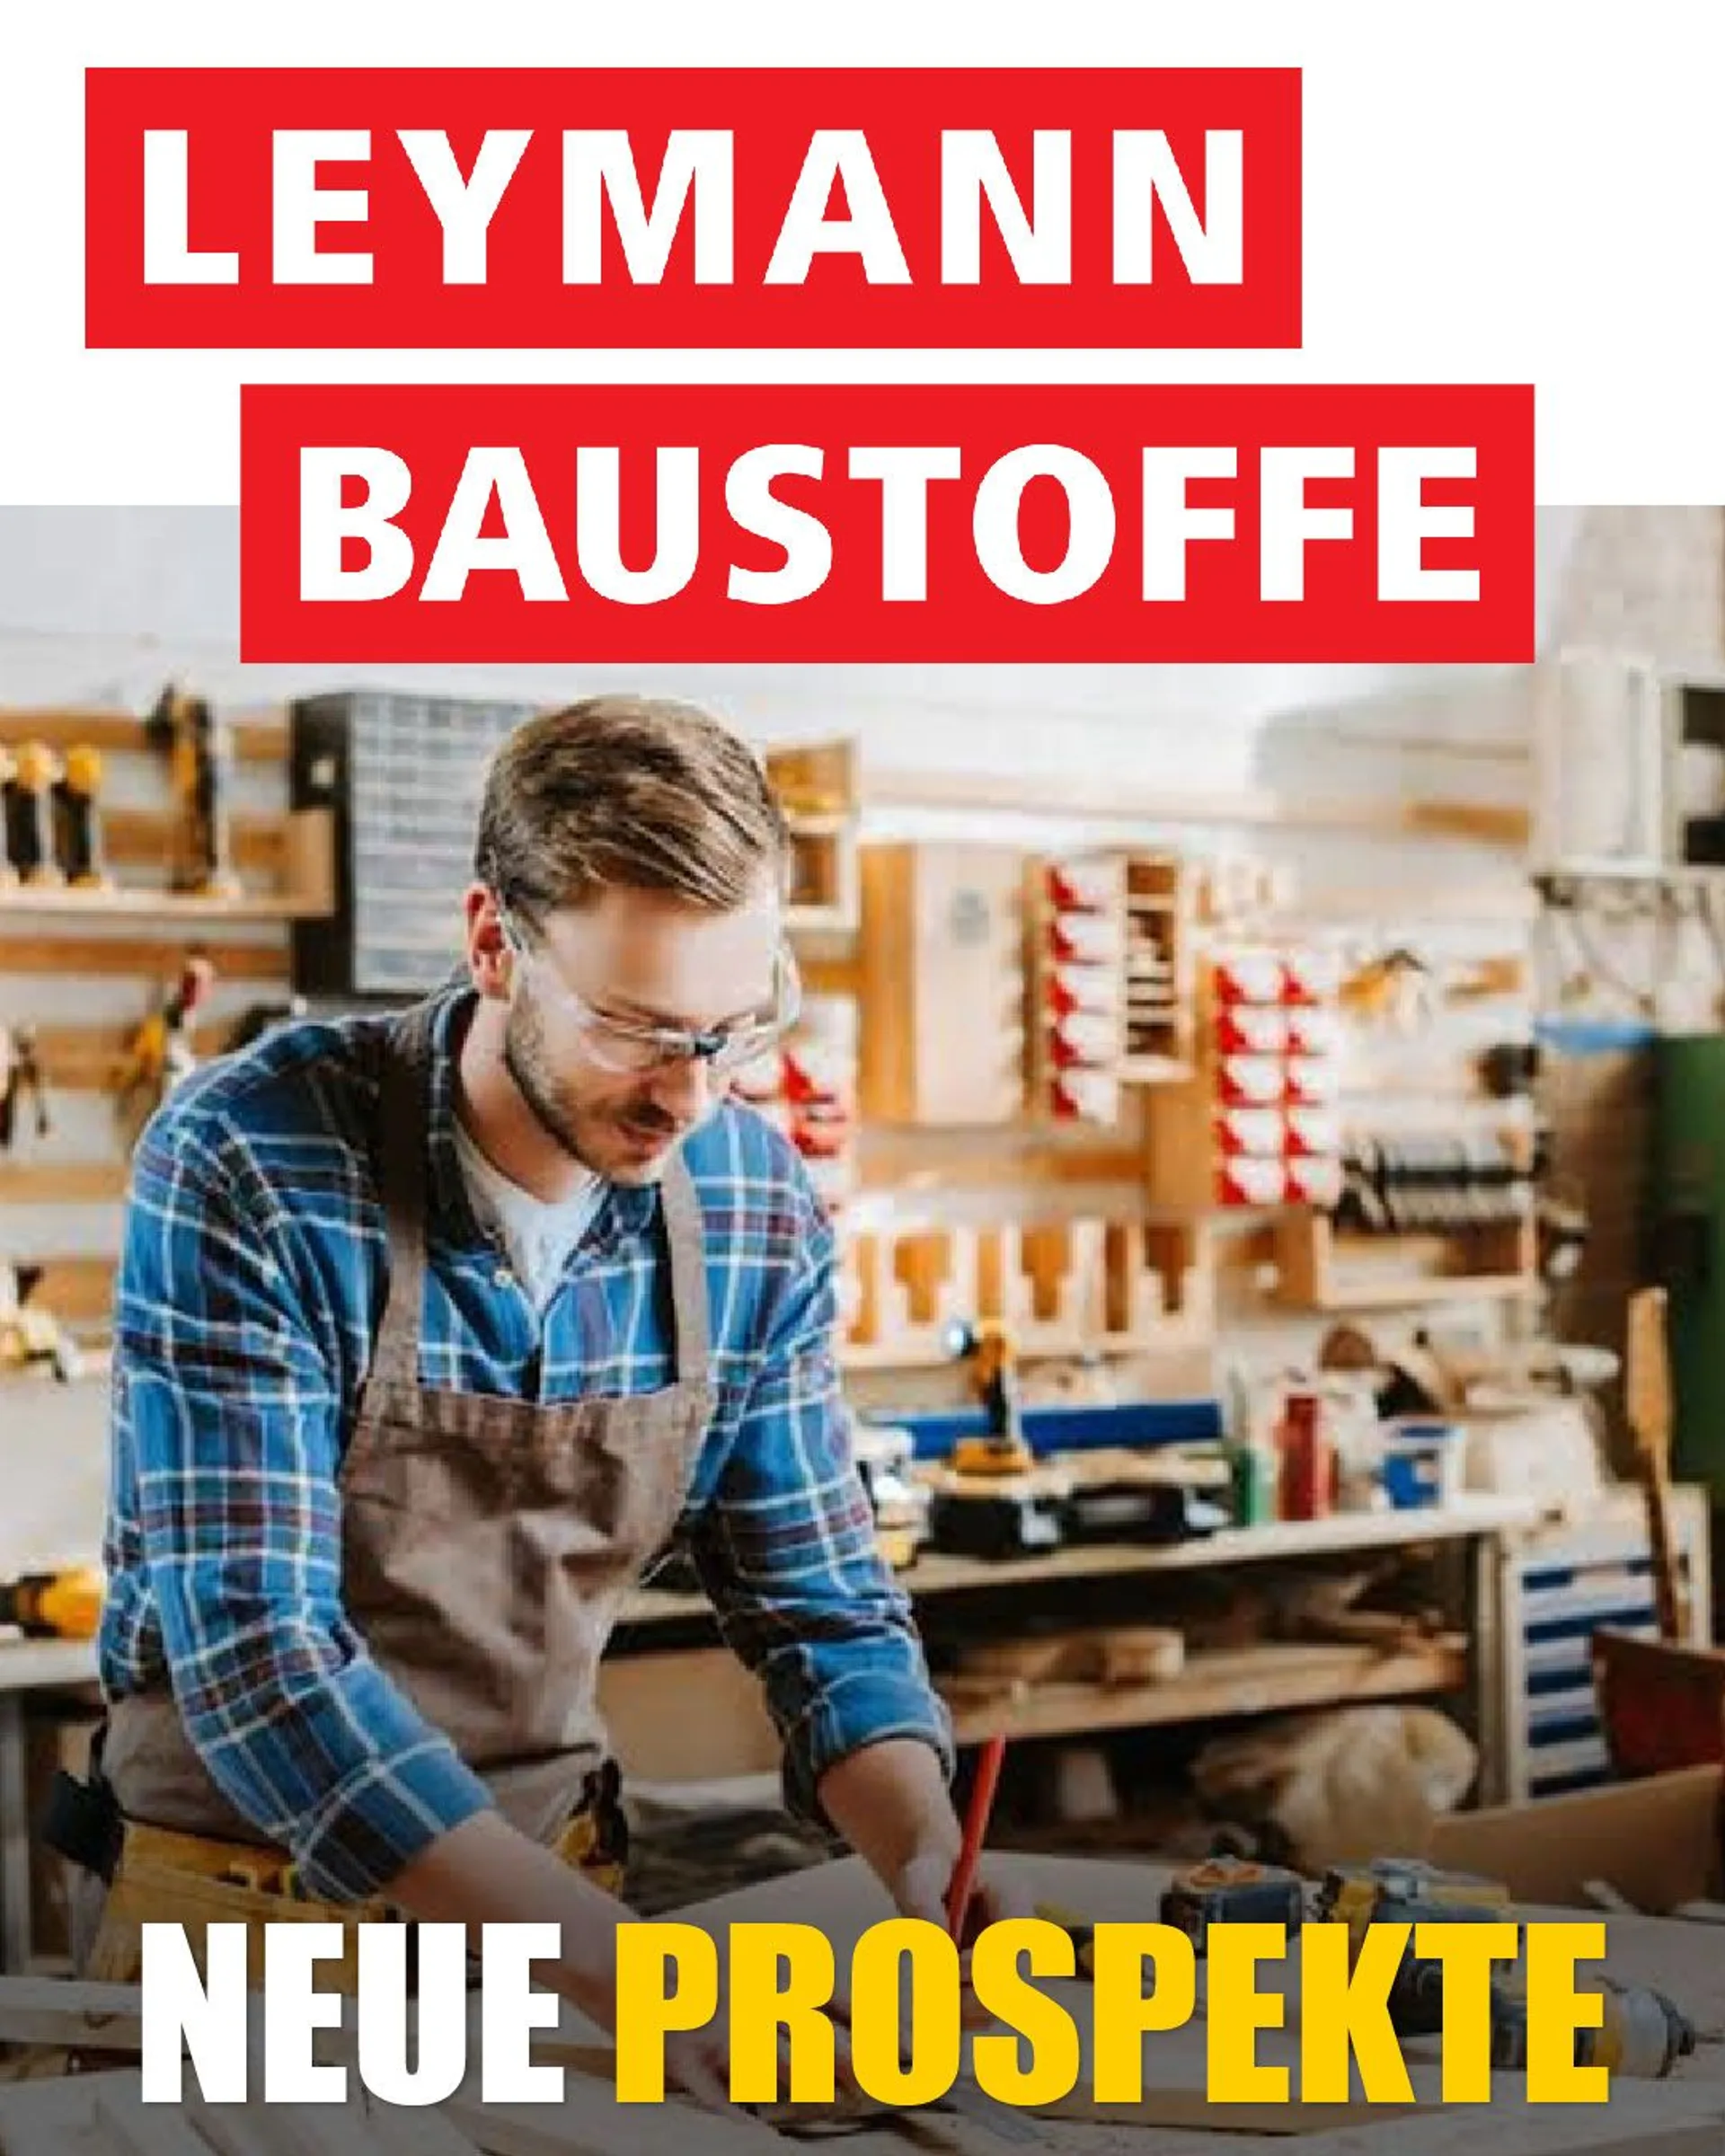 Leymann Baustoffe - Baumarkt